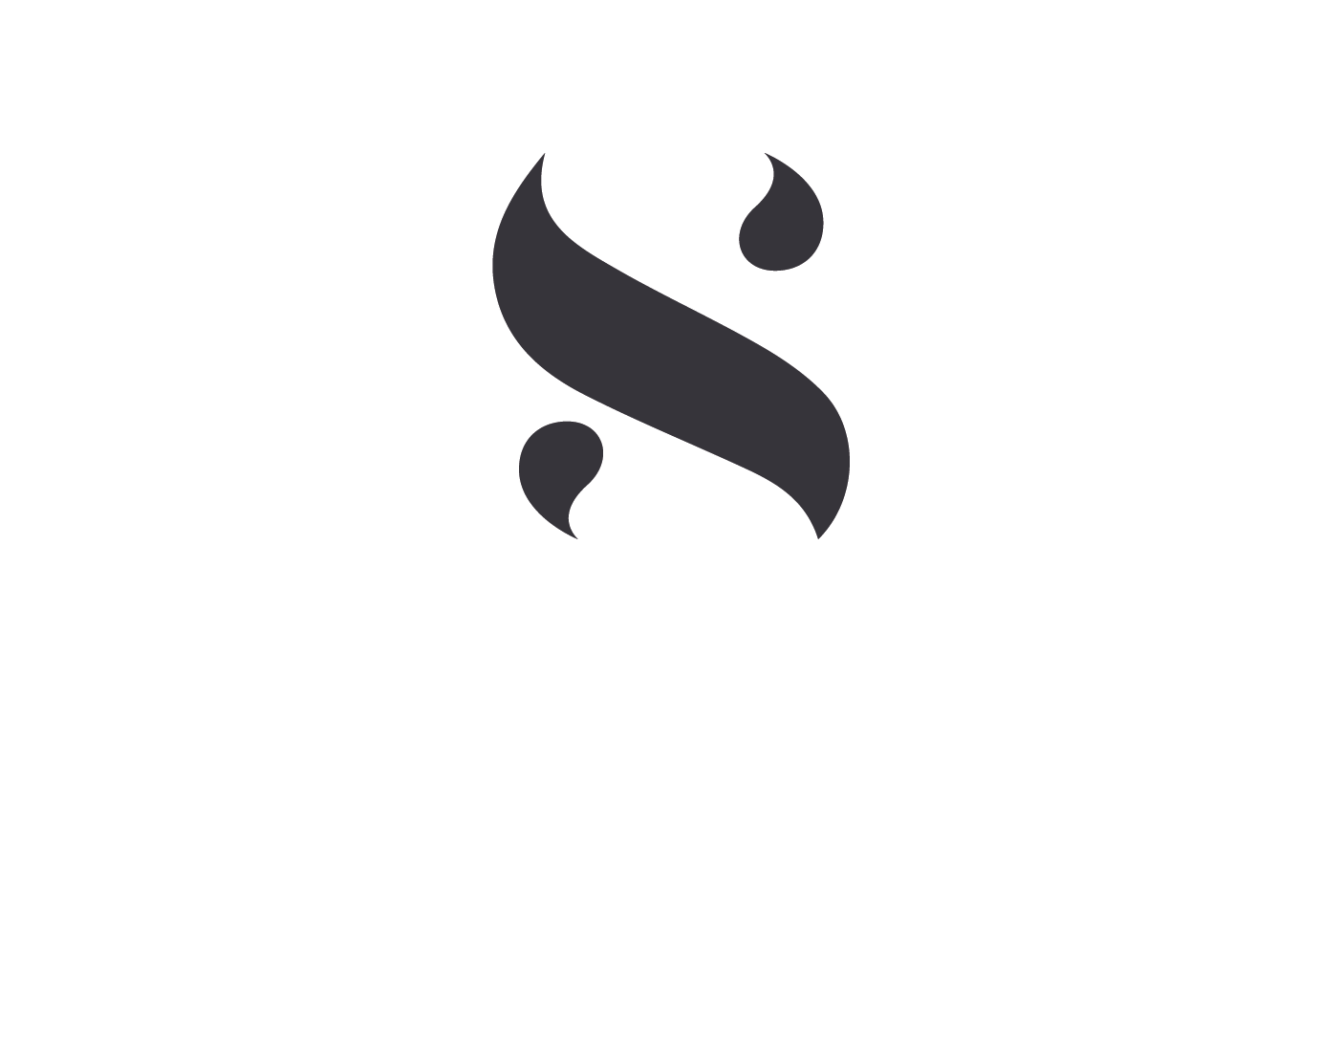 SOUARE-HOTELS-LOGO-10